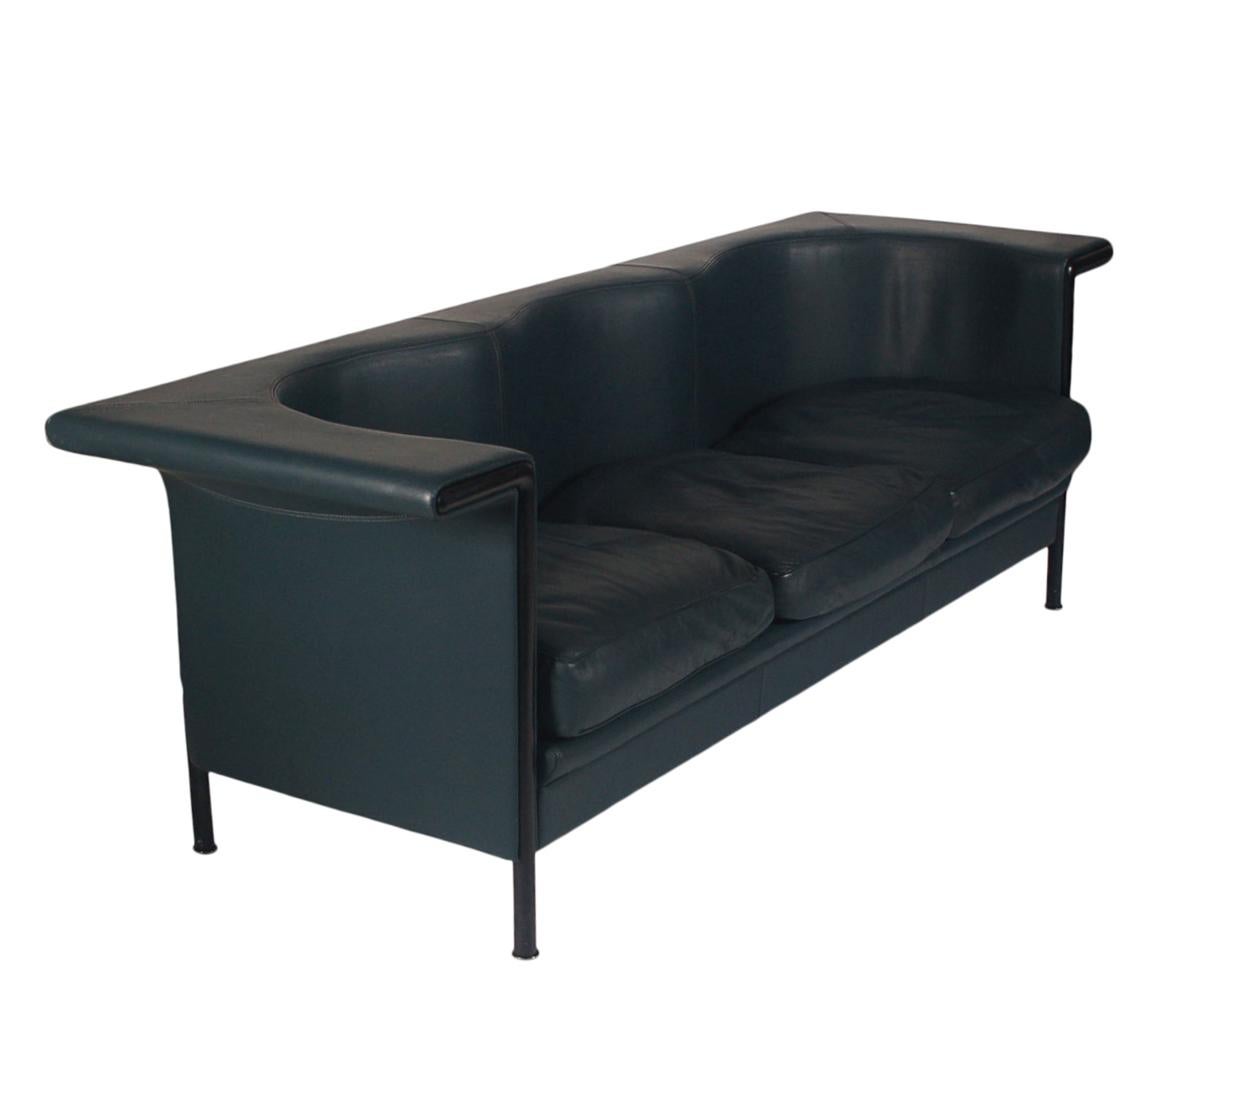 Post-Modern Midcentury Italian Postmodern Leather Sofa by Antonio Citterio for Moroso